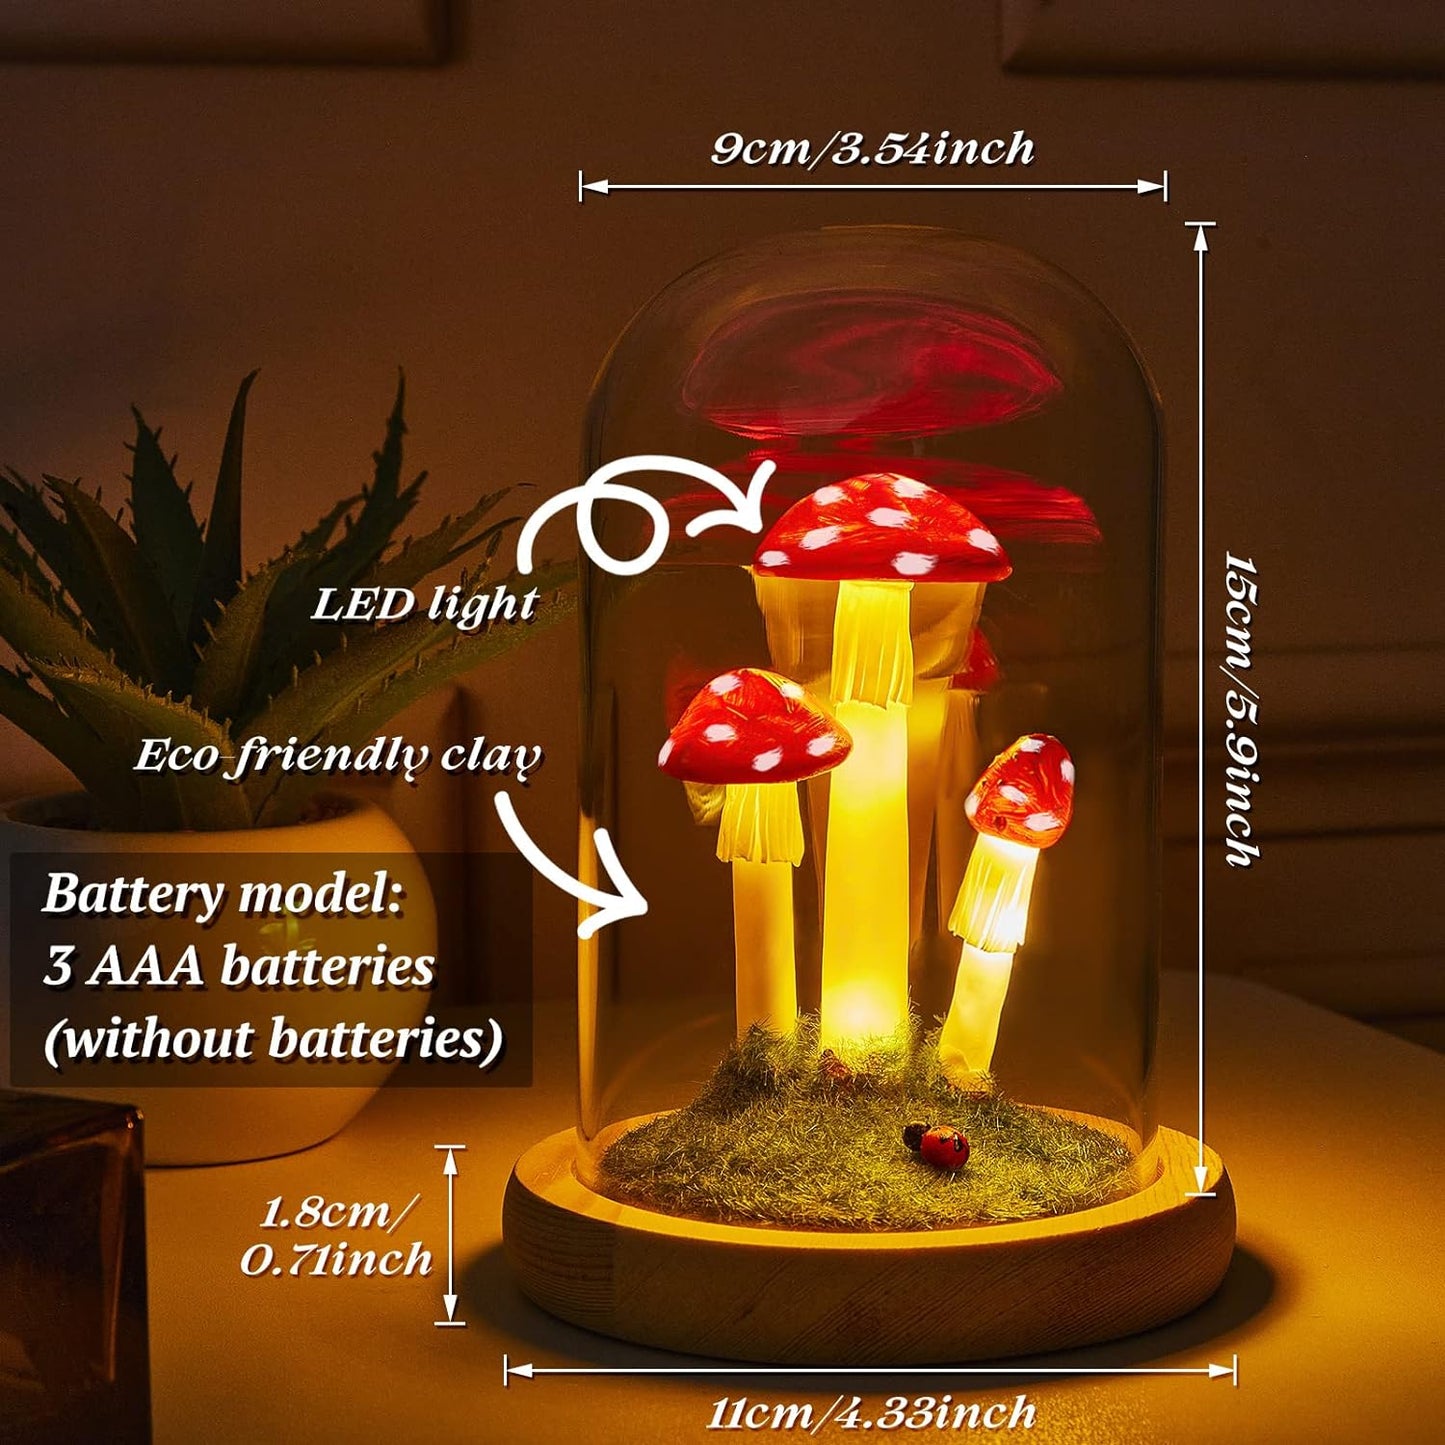 Mushroom Night Lamp